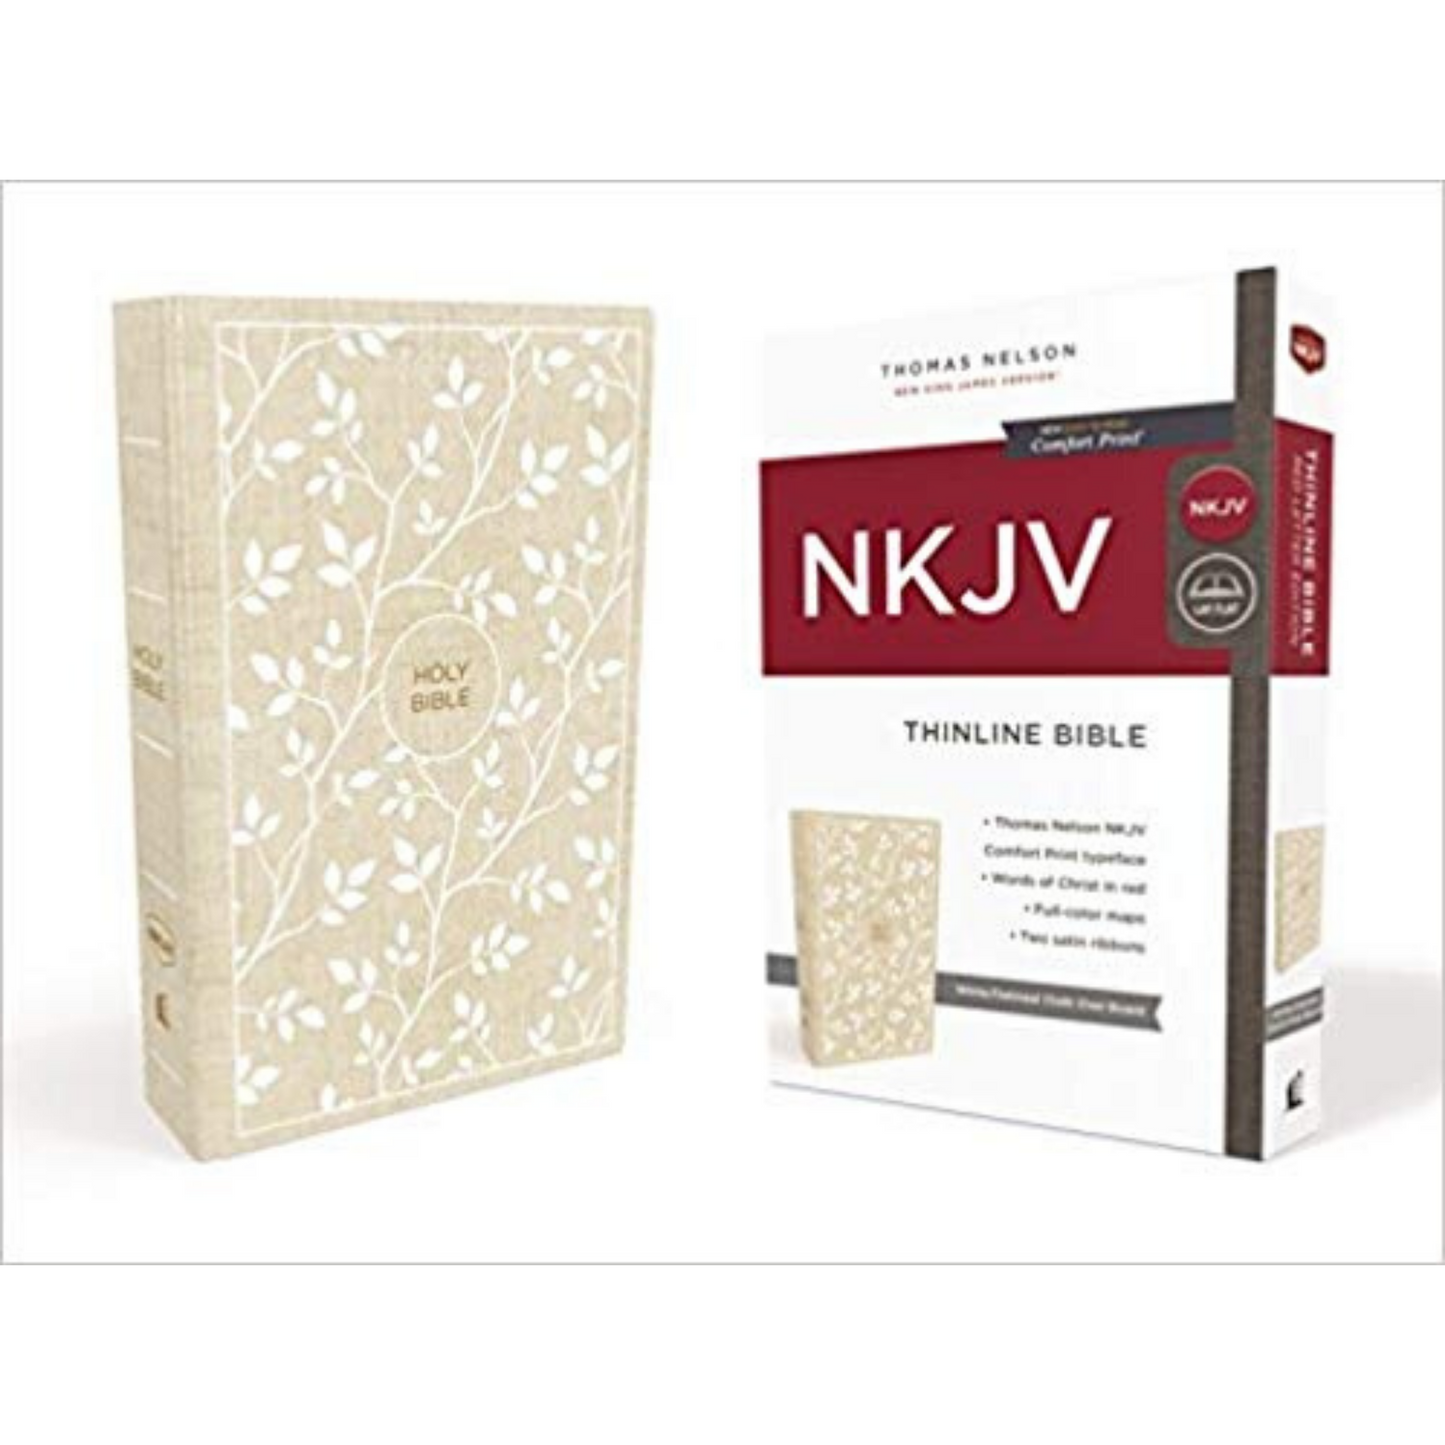 NKJV Thinline Bible